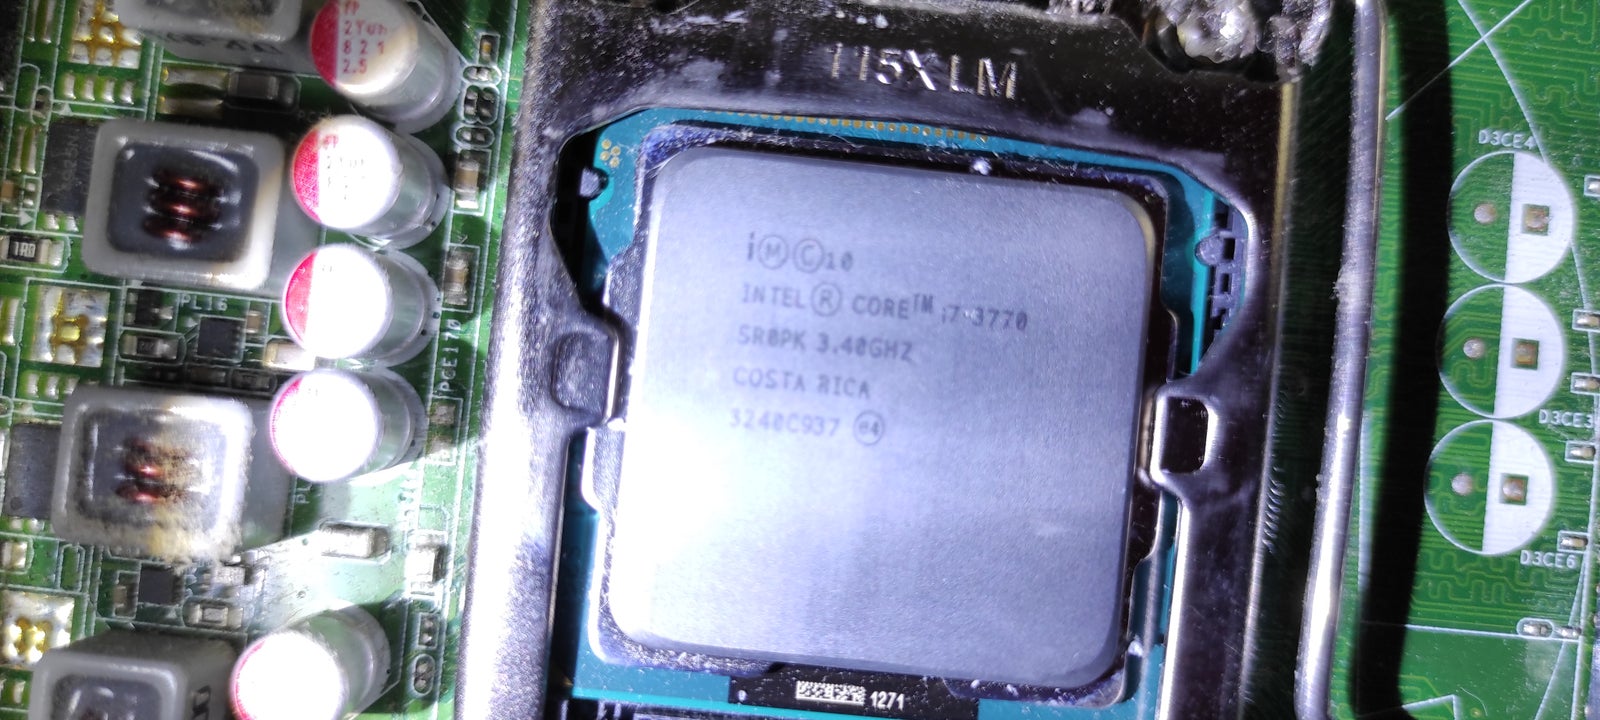 Mother-board i7 CPU-3770, Intel, i7